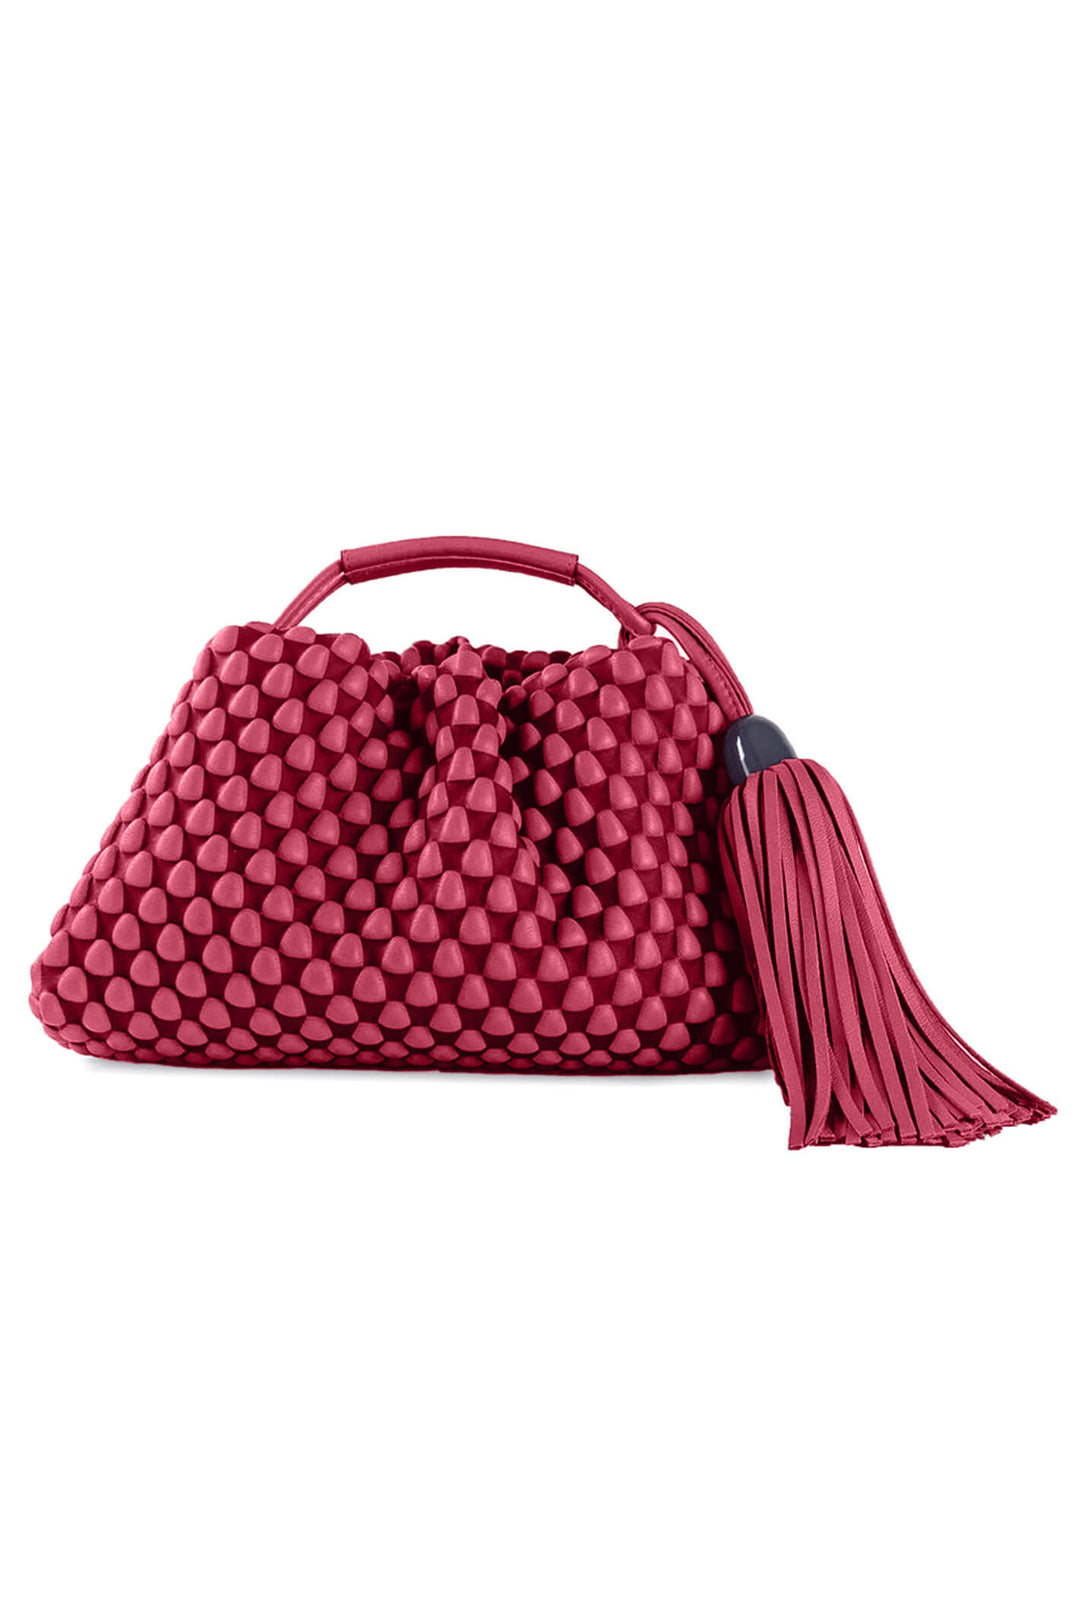 Tissa Fontaneda B80 Tango Nappa Leather Cyclamen Bubble Bag - Olivia Grace Fashion